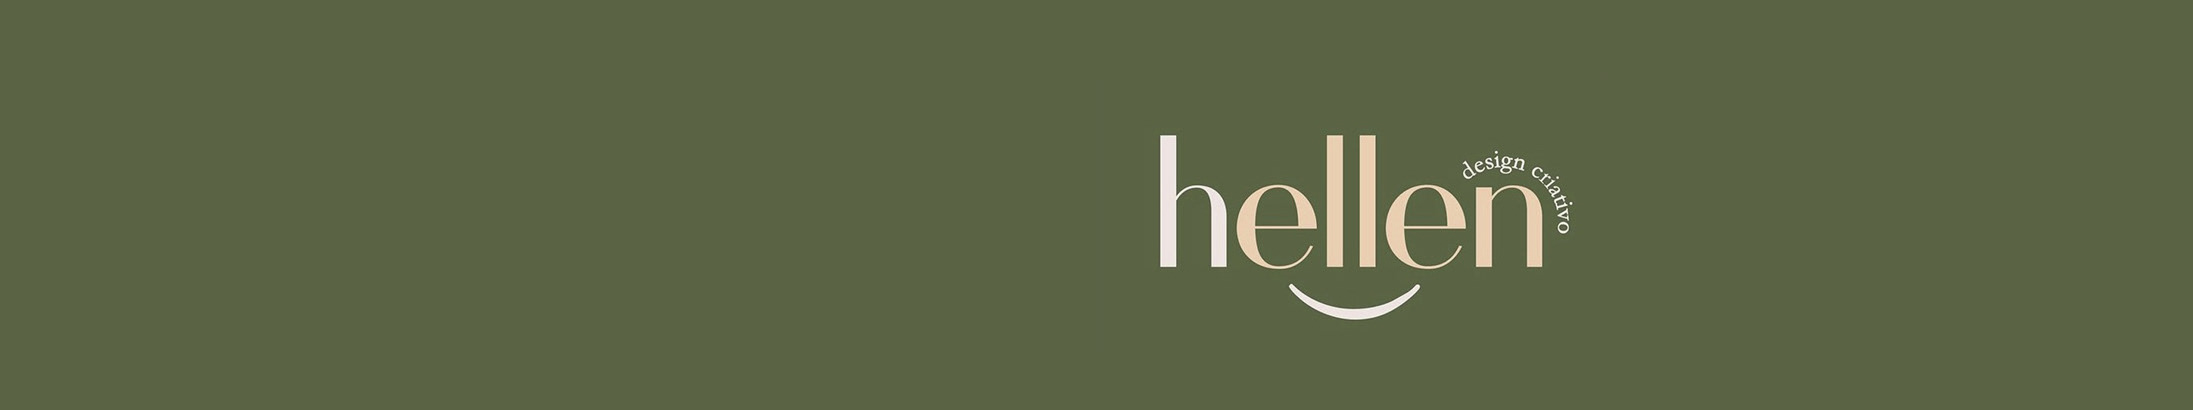 Hellen Design Criativo's profile banner